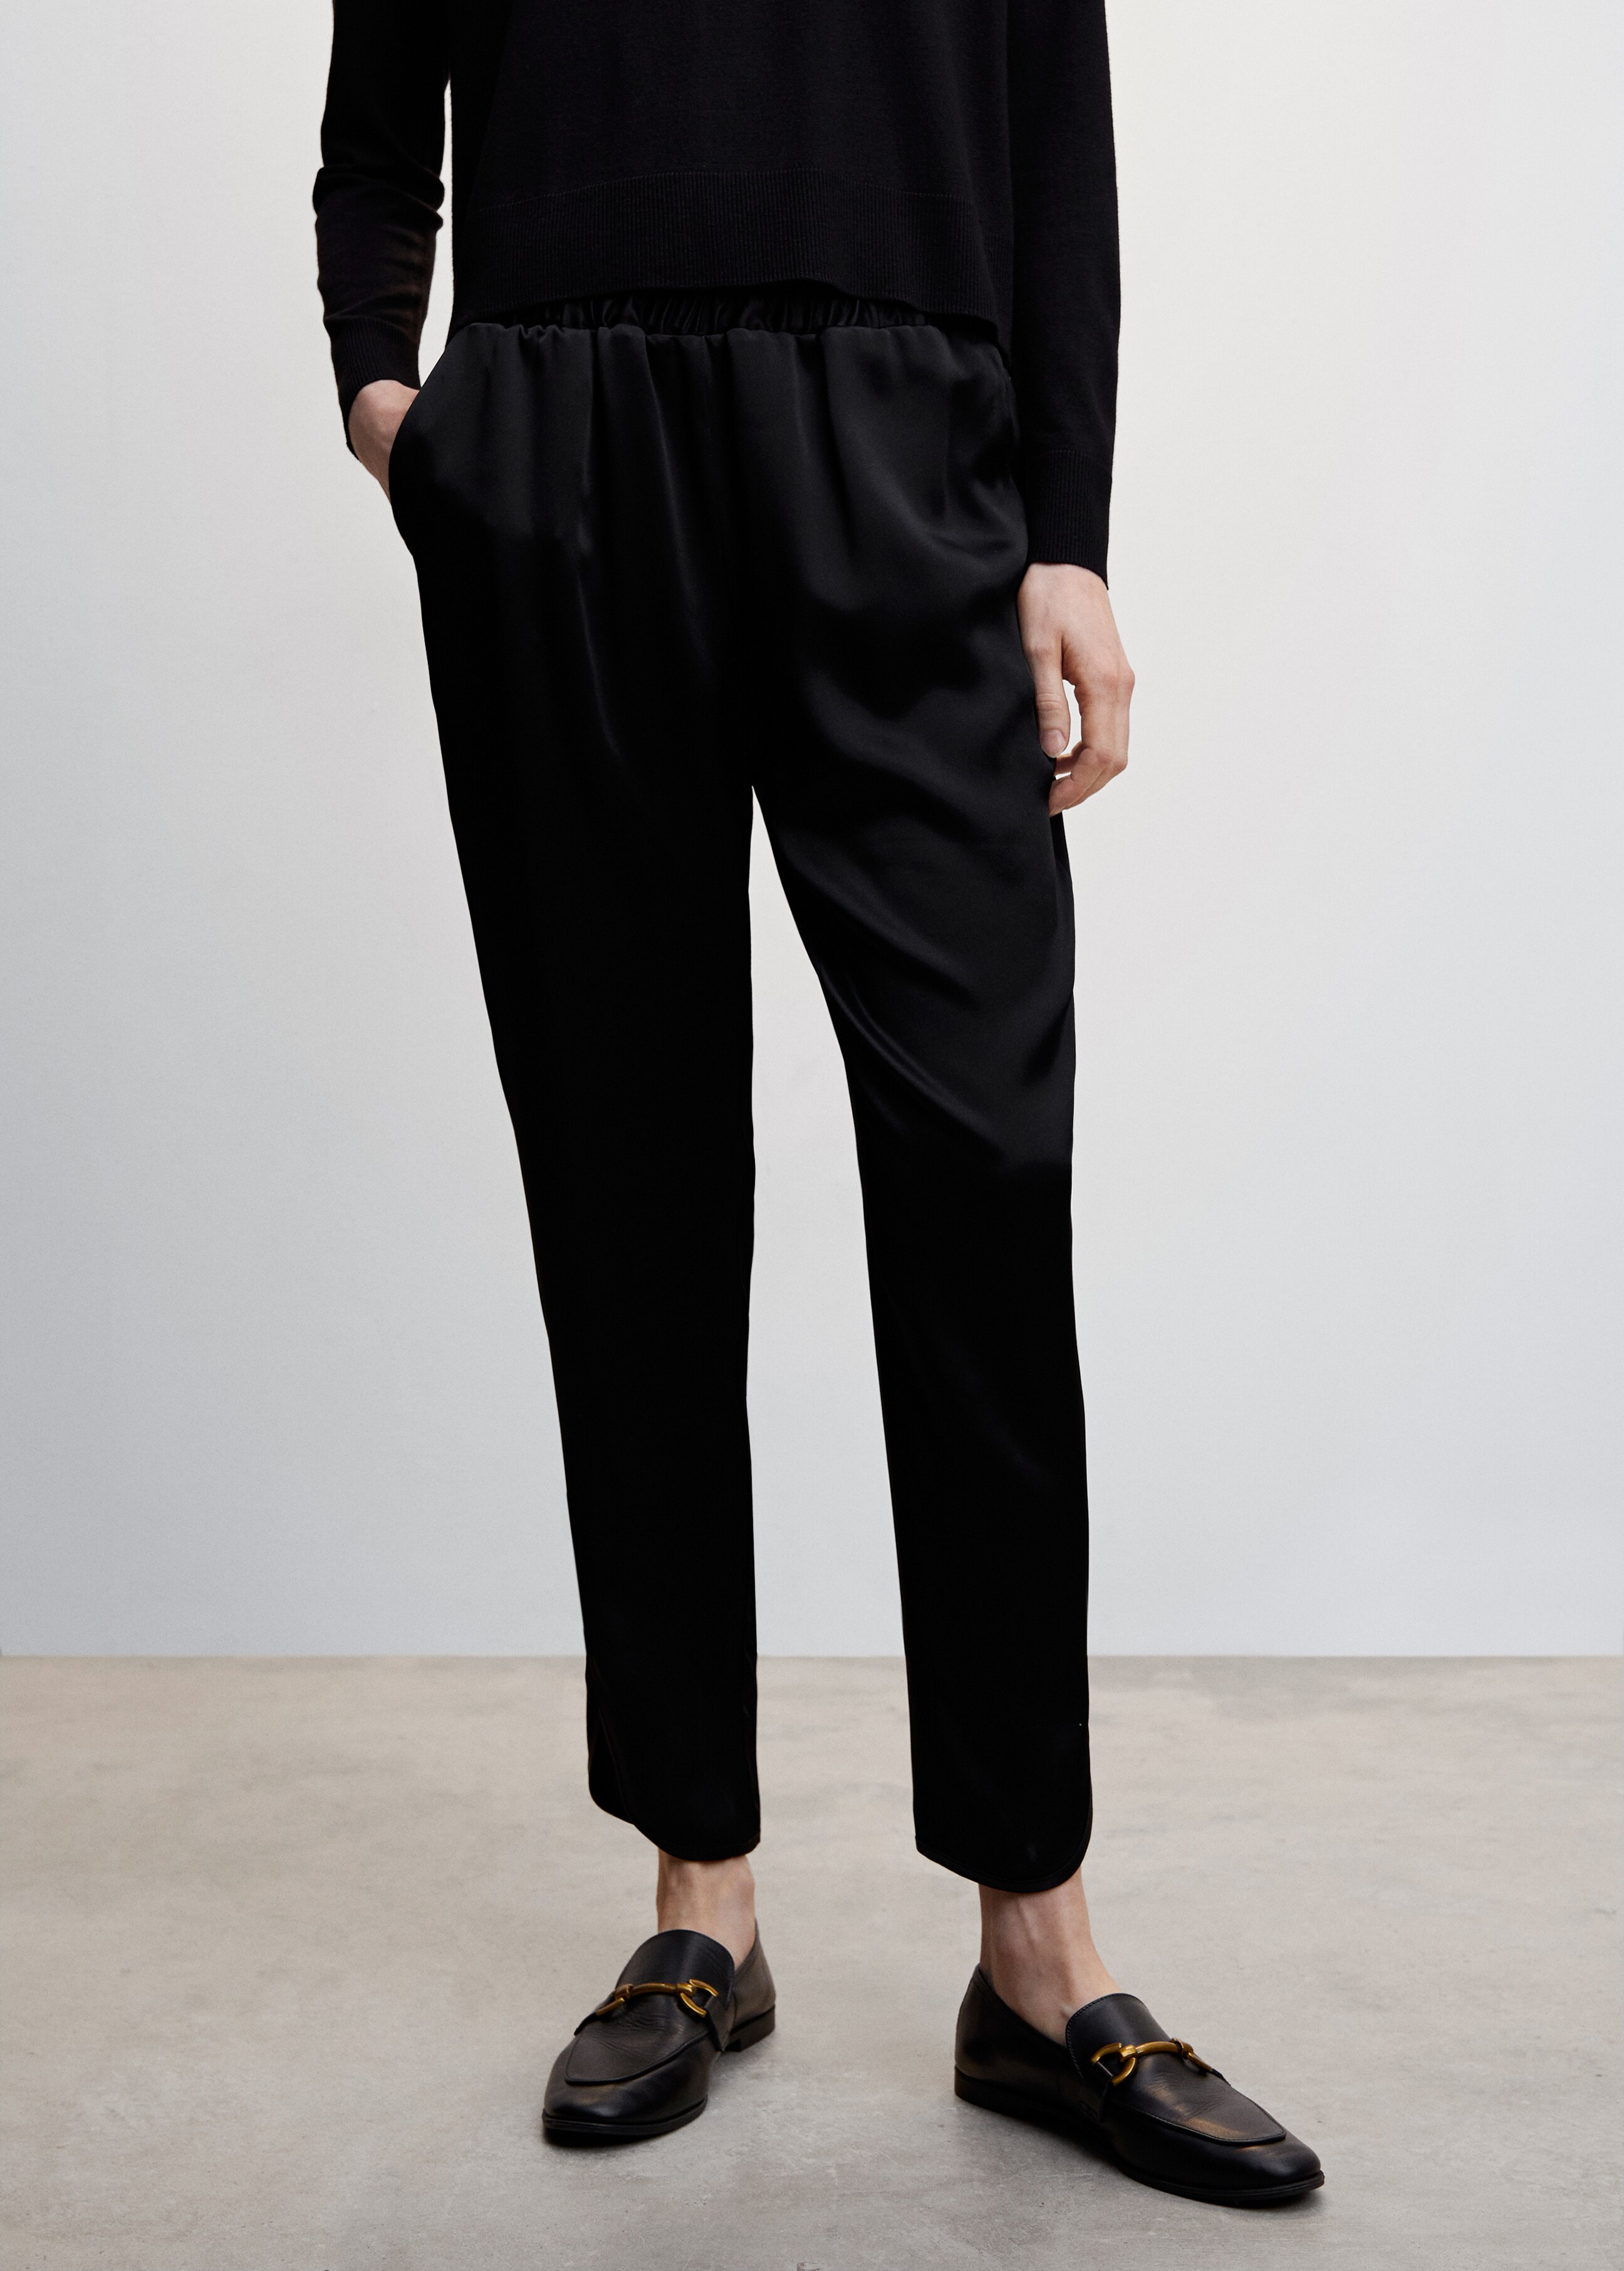 Satin trousers with elastic waist - Medium plane